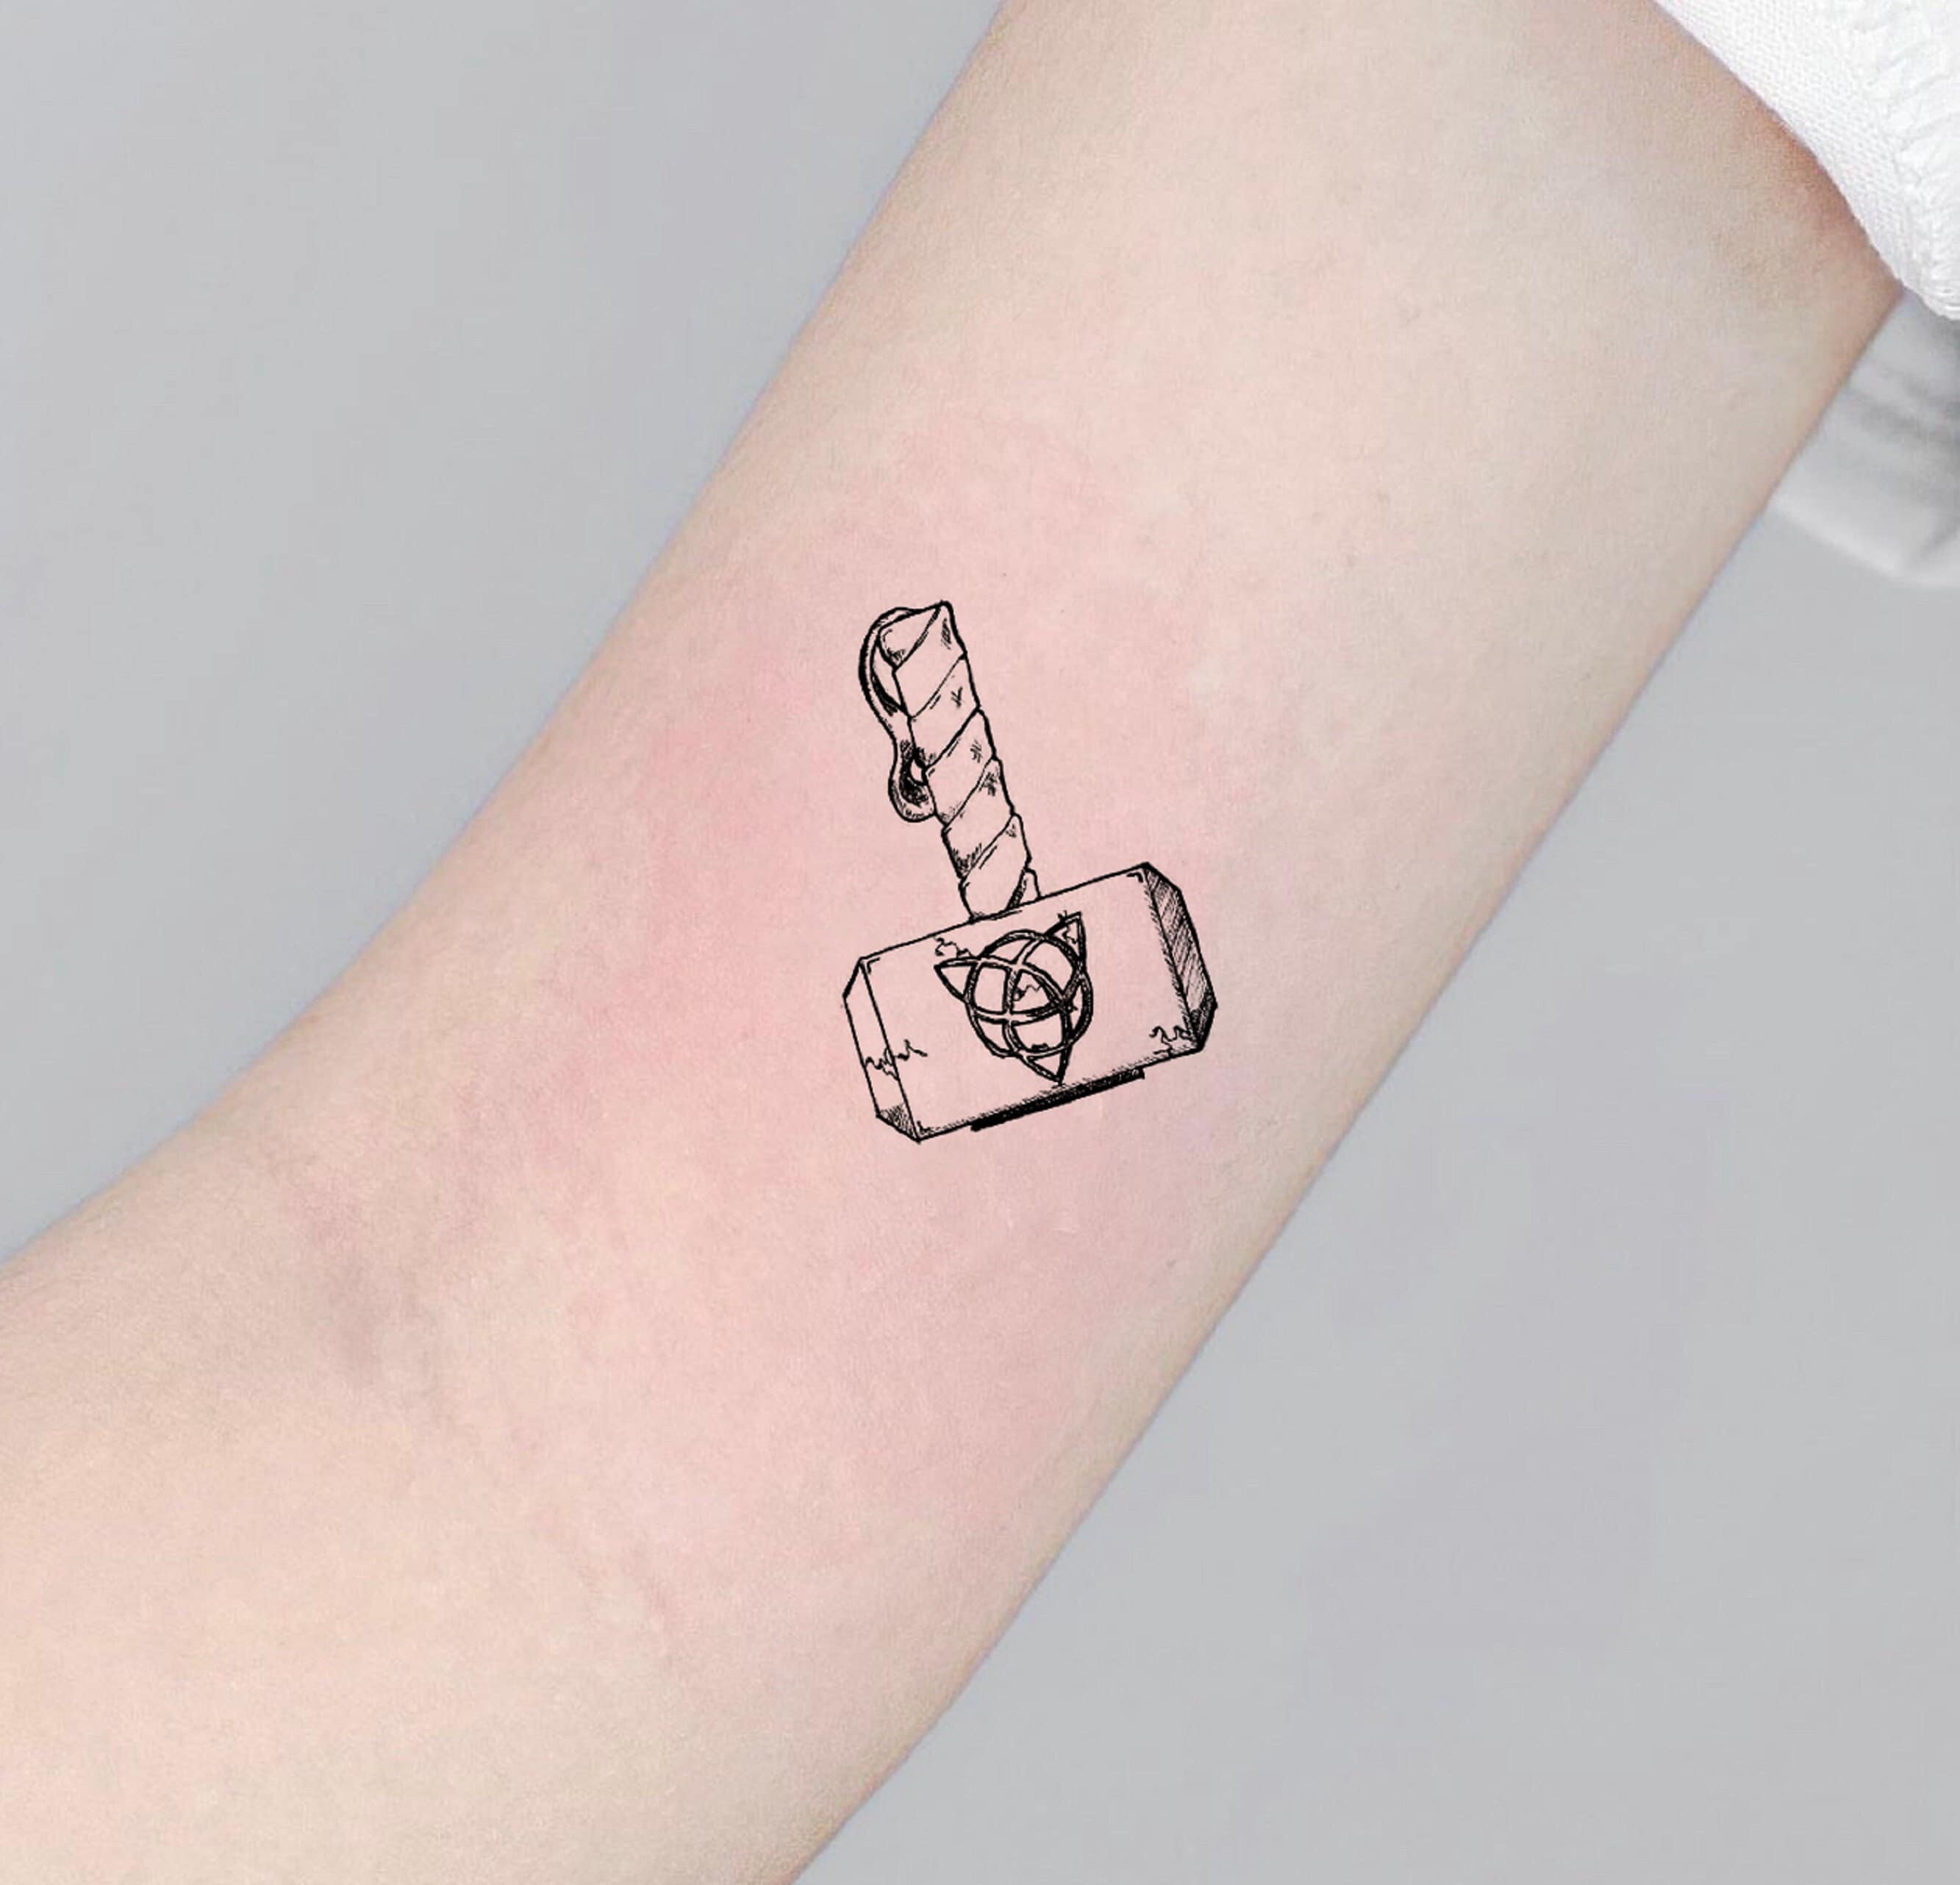 Thor's Hammer Tattoo - Best Tattoo Ideas Gallery